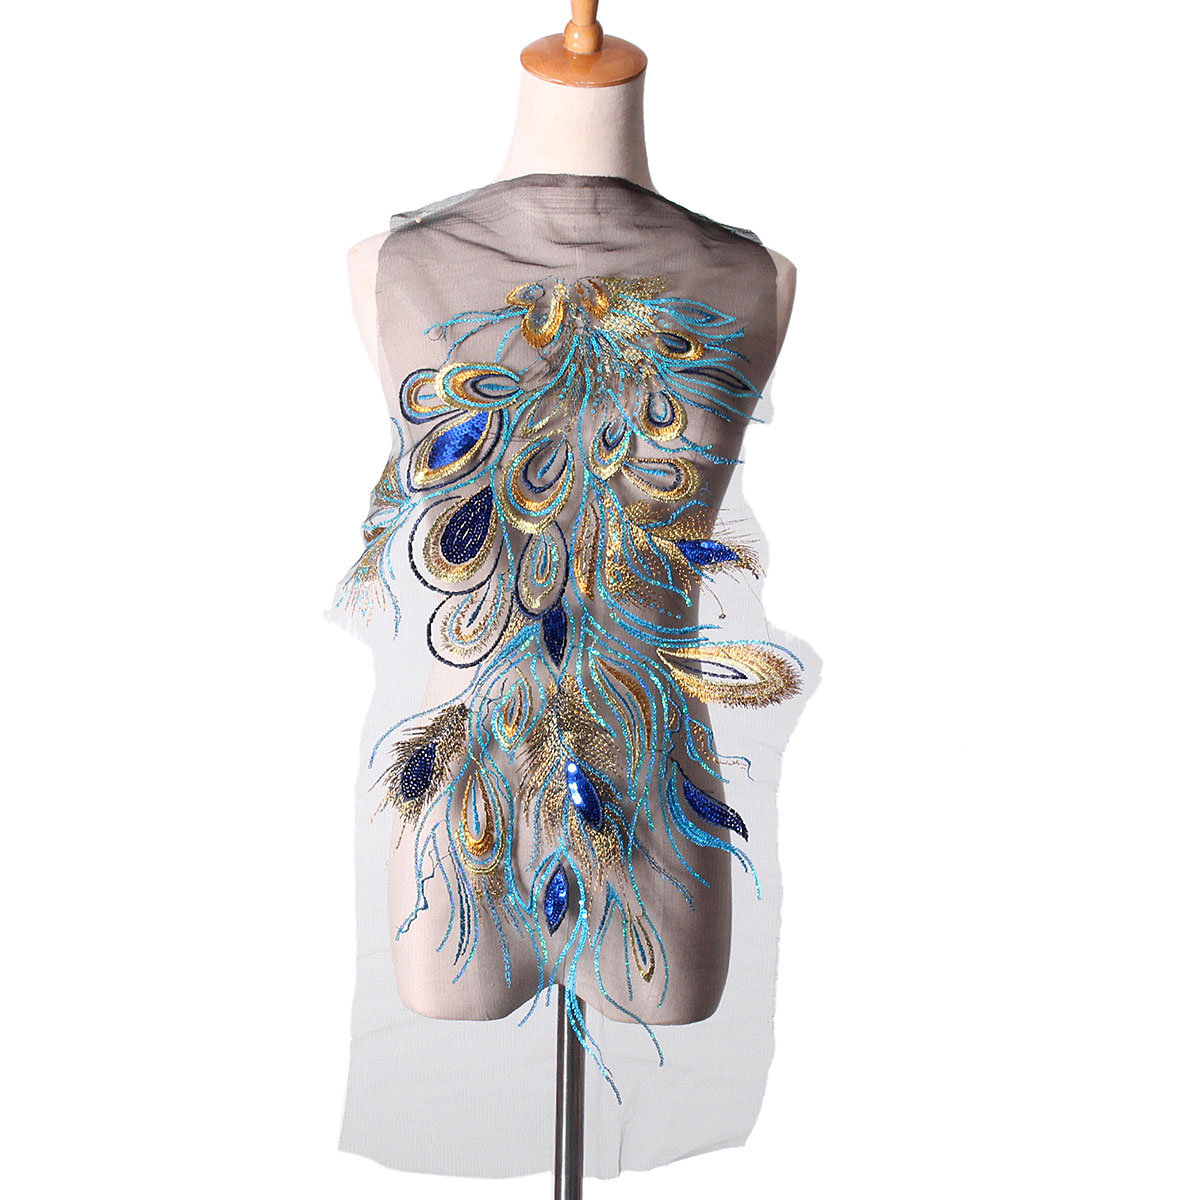 

Sequins Peacock Feather Applique Patches Sew Trim for Women Dress Clothes Decor DIY Accessories